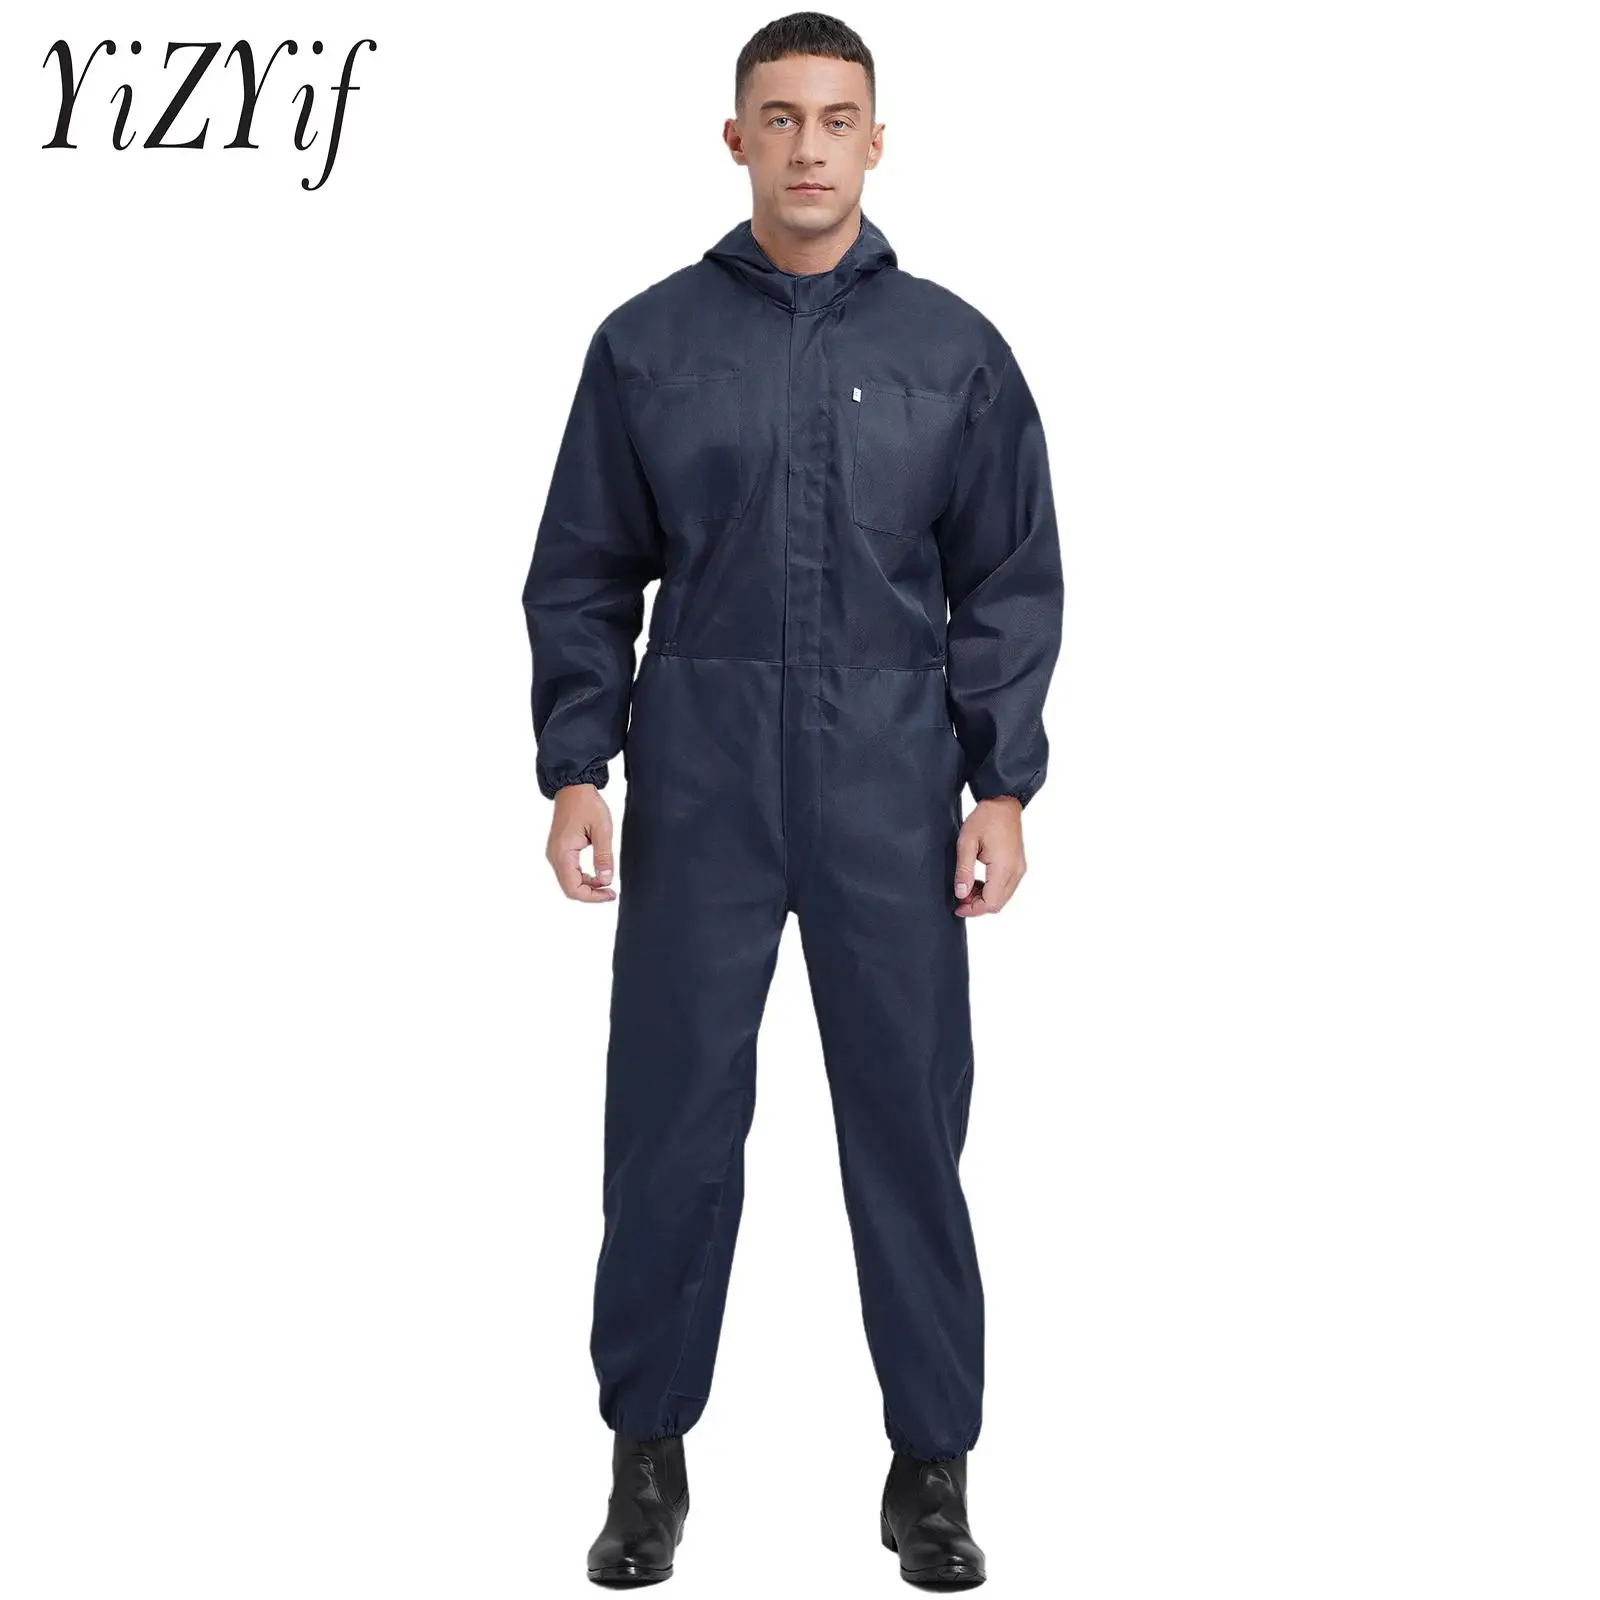 

Mens Dustproof Jumpsuit Hooded Coverall Long Sleeve Front Half Zipper Big Pockets Overalls Dungarees for Workshop Worker